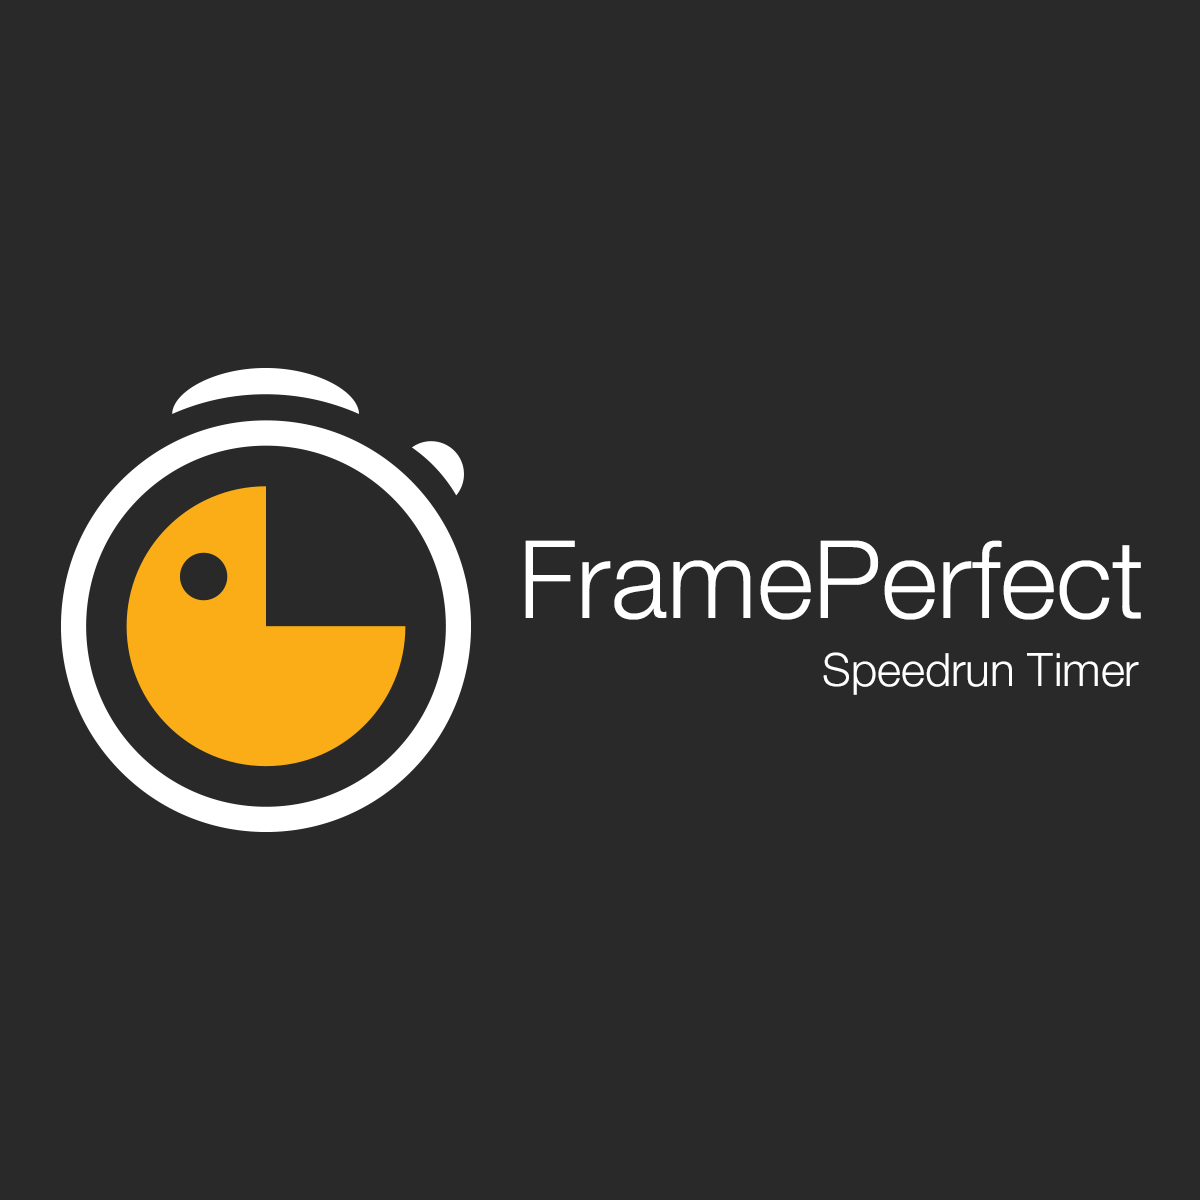 FramePerfect Speedrun Timer by Futuretro Studios